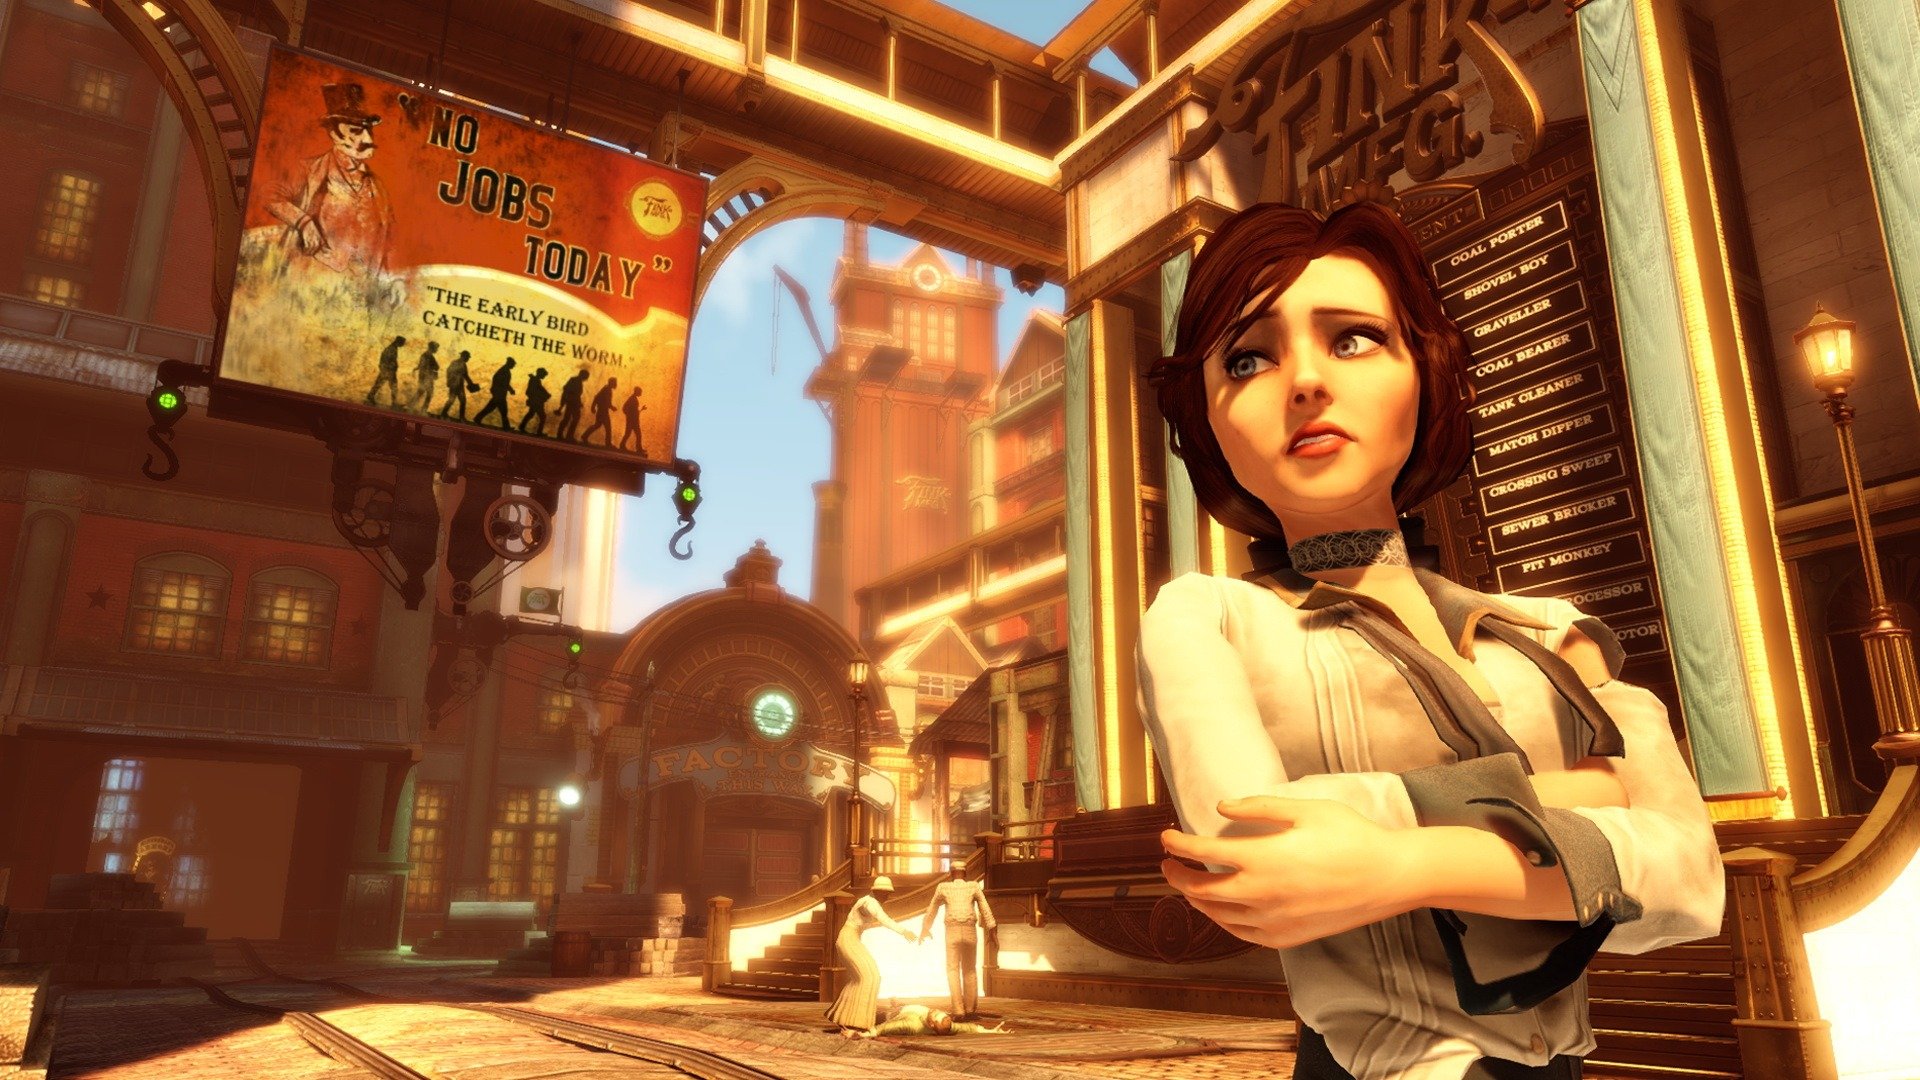 Report: BioShock director's new game facing troubled development